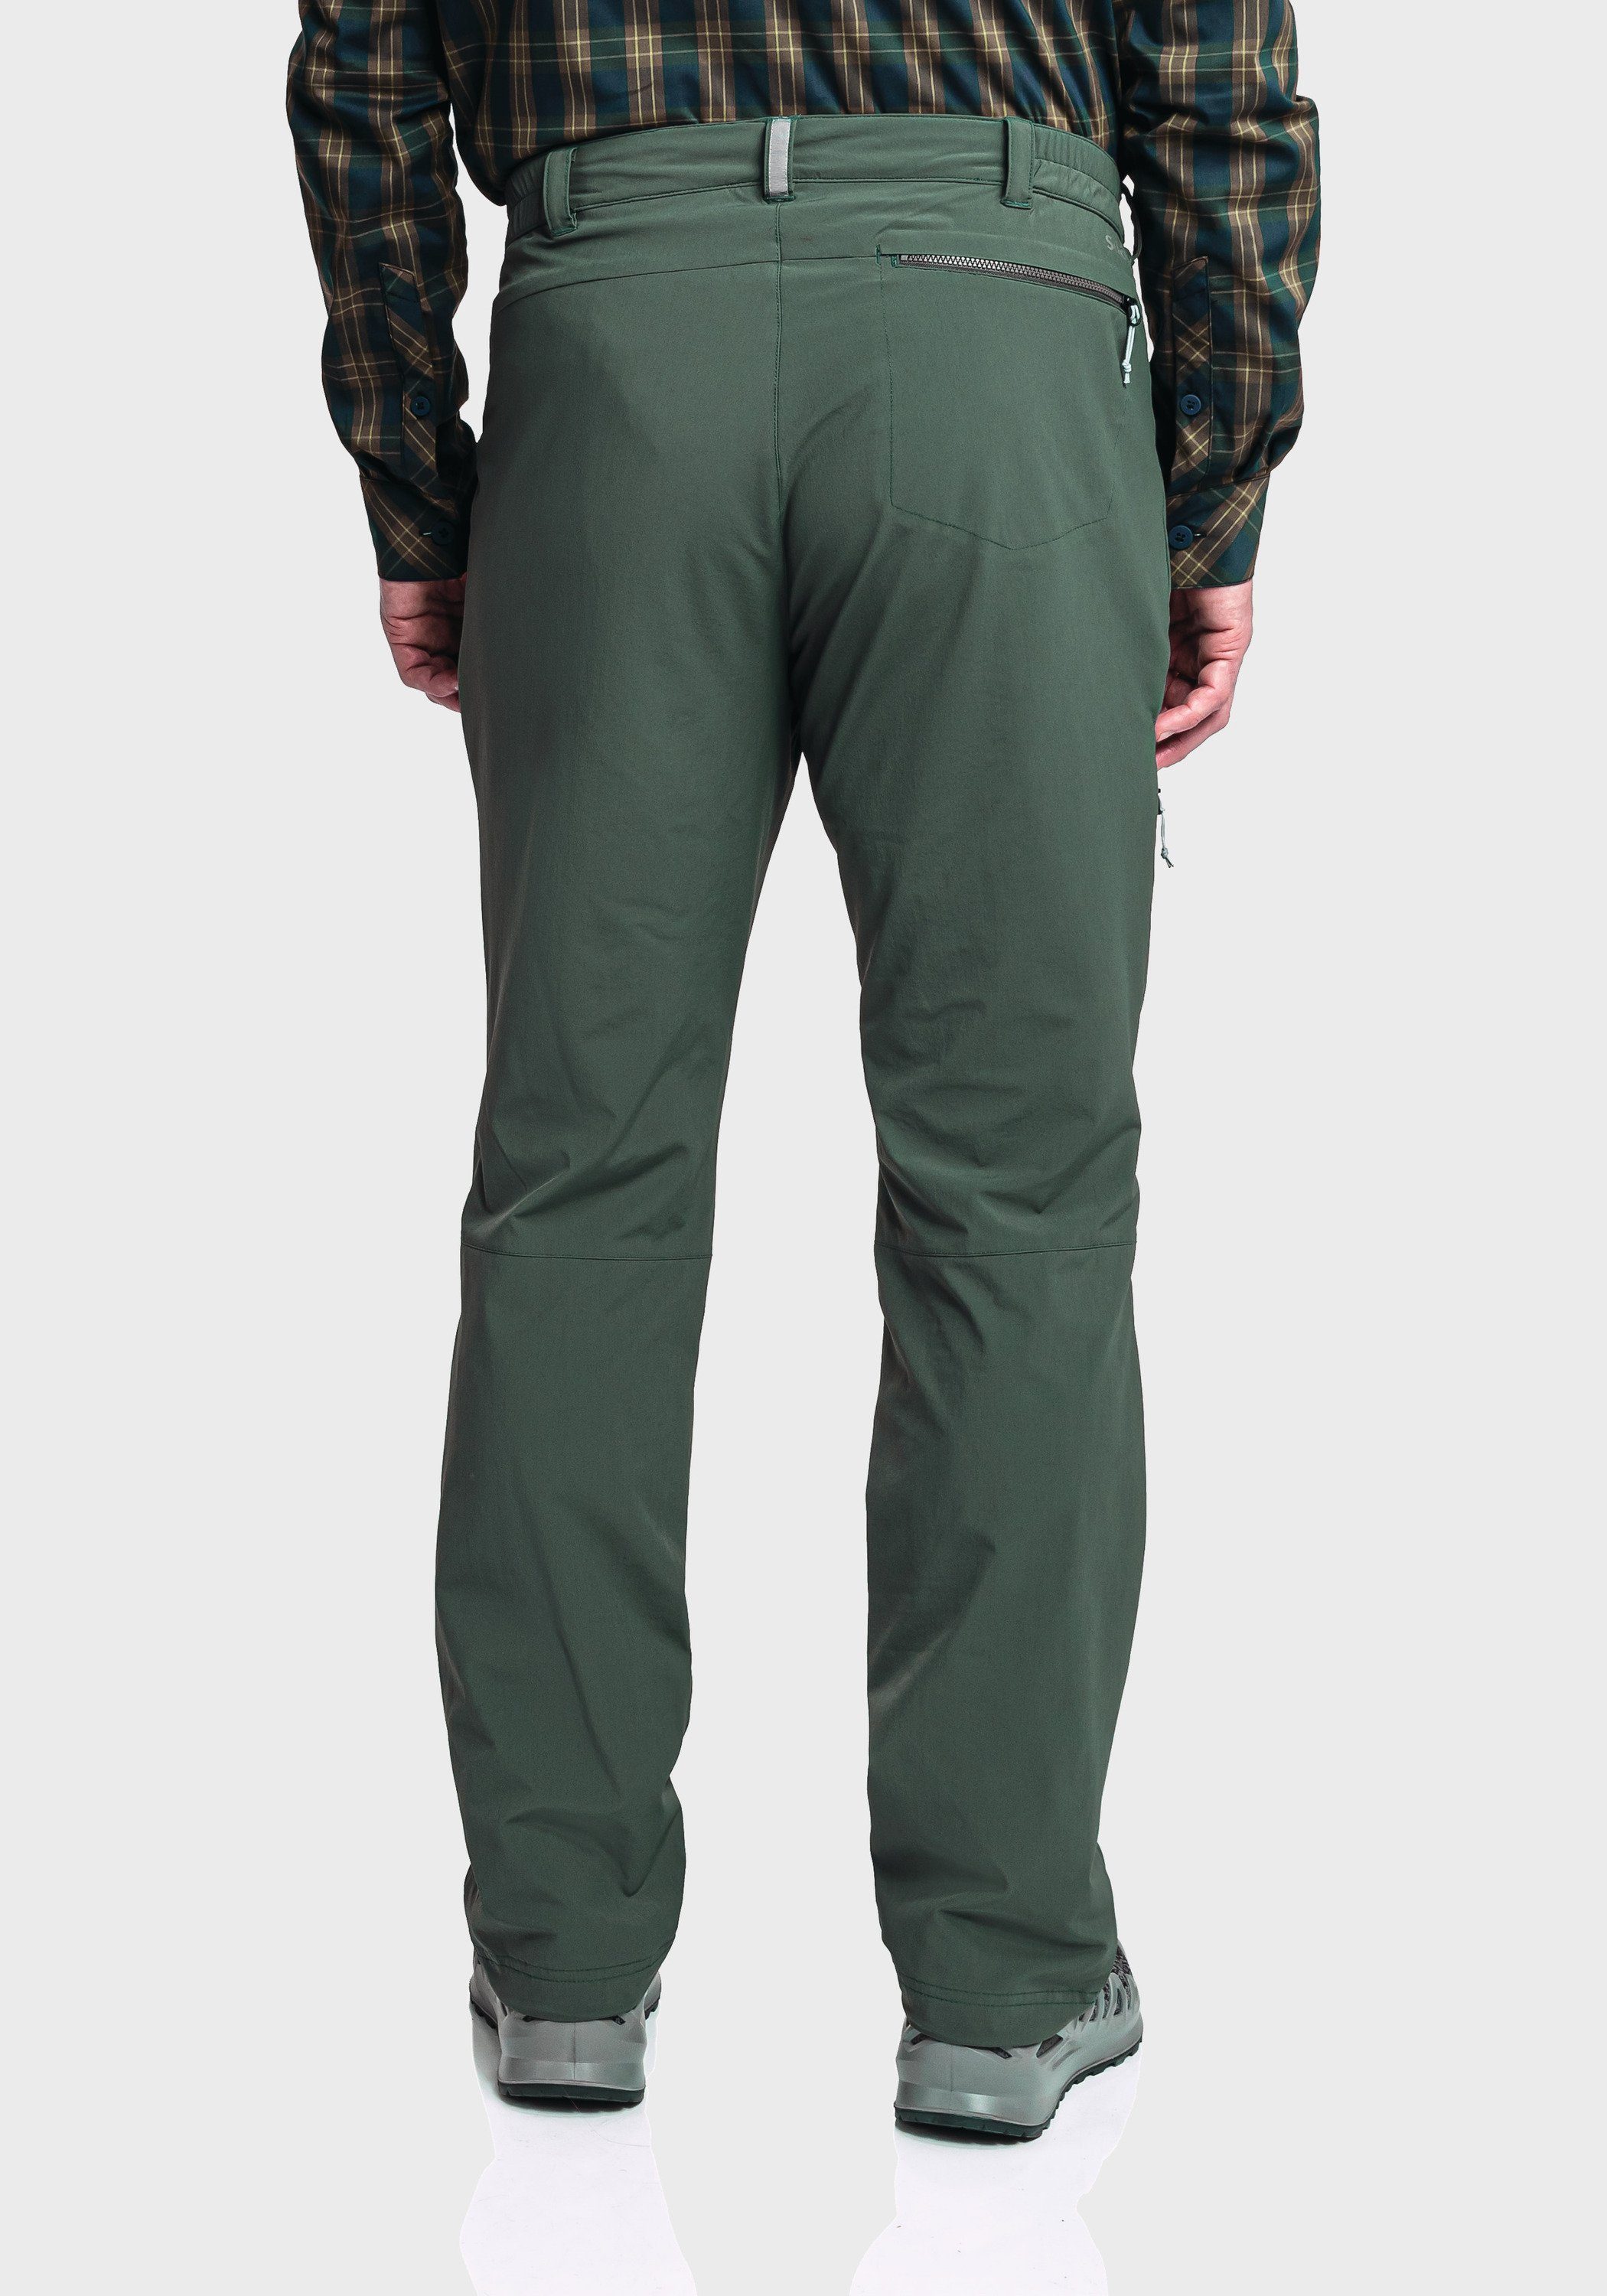 Schöffel Outdoorhose Pants Koper1 Warm grün M